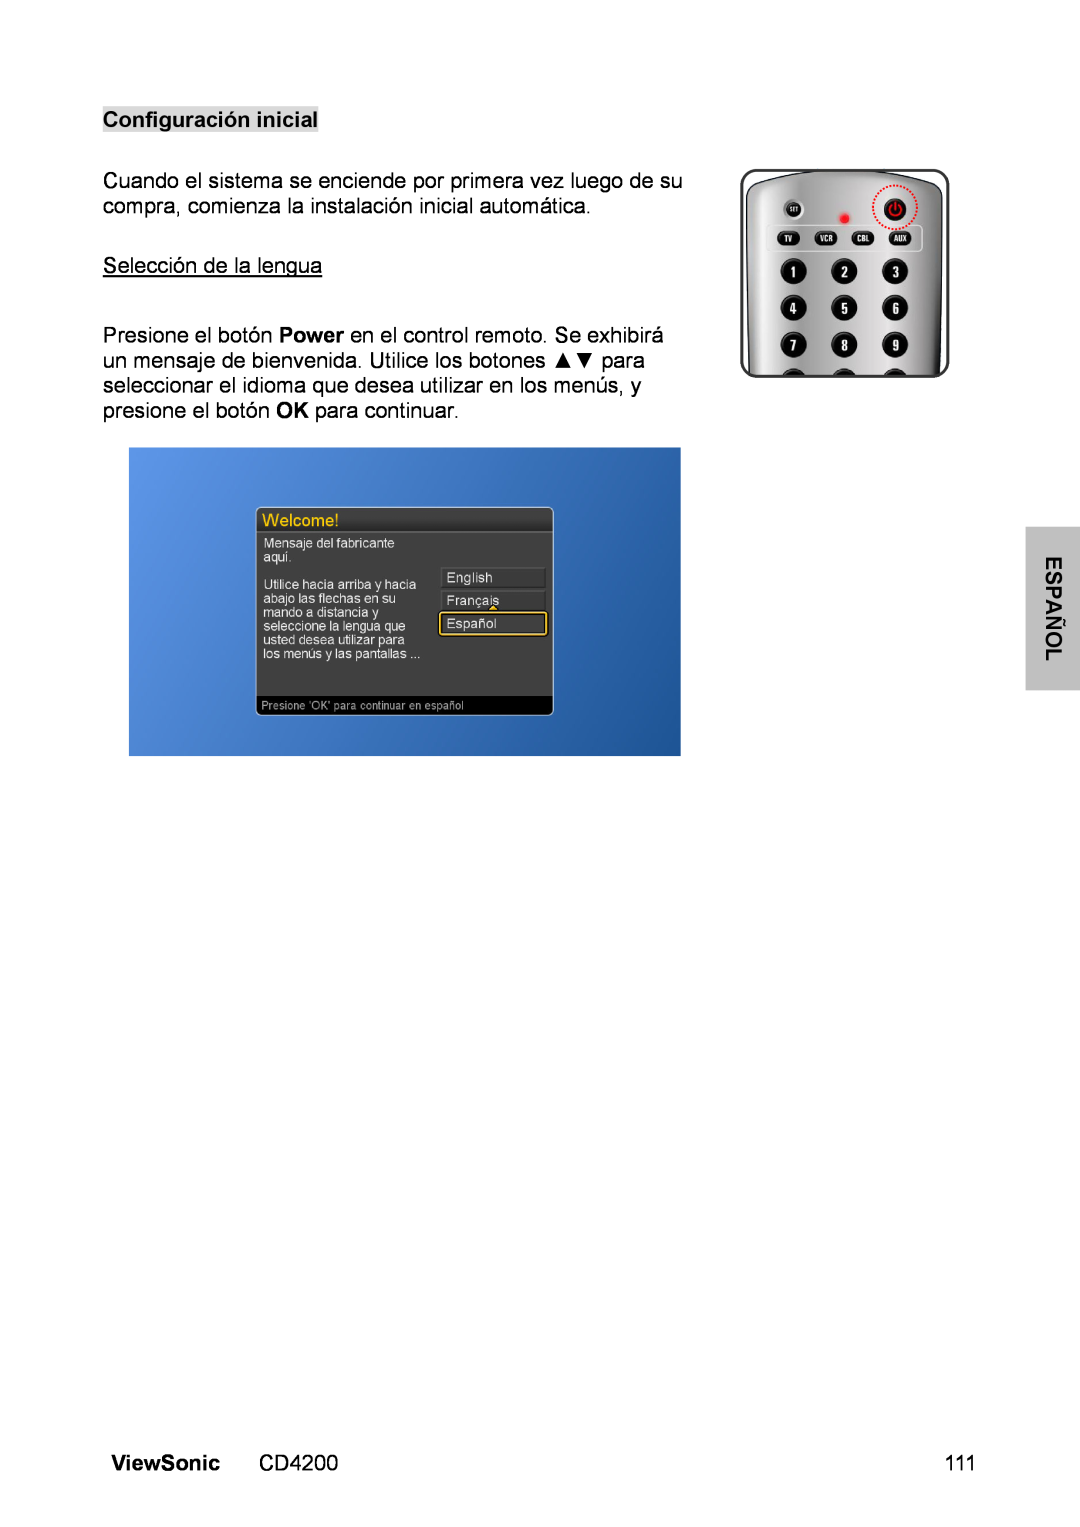 ViewSonic manual Configuración inicial, Selección de la lengua, Español, ViewSonic CD4200 